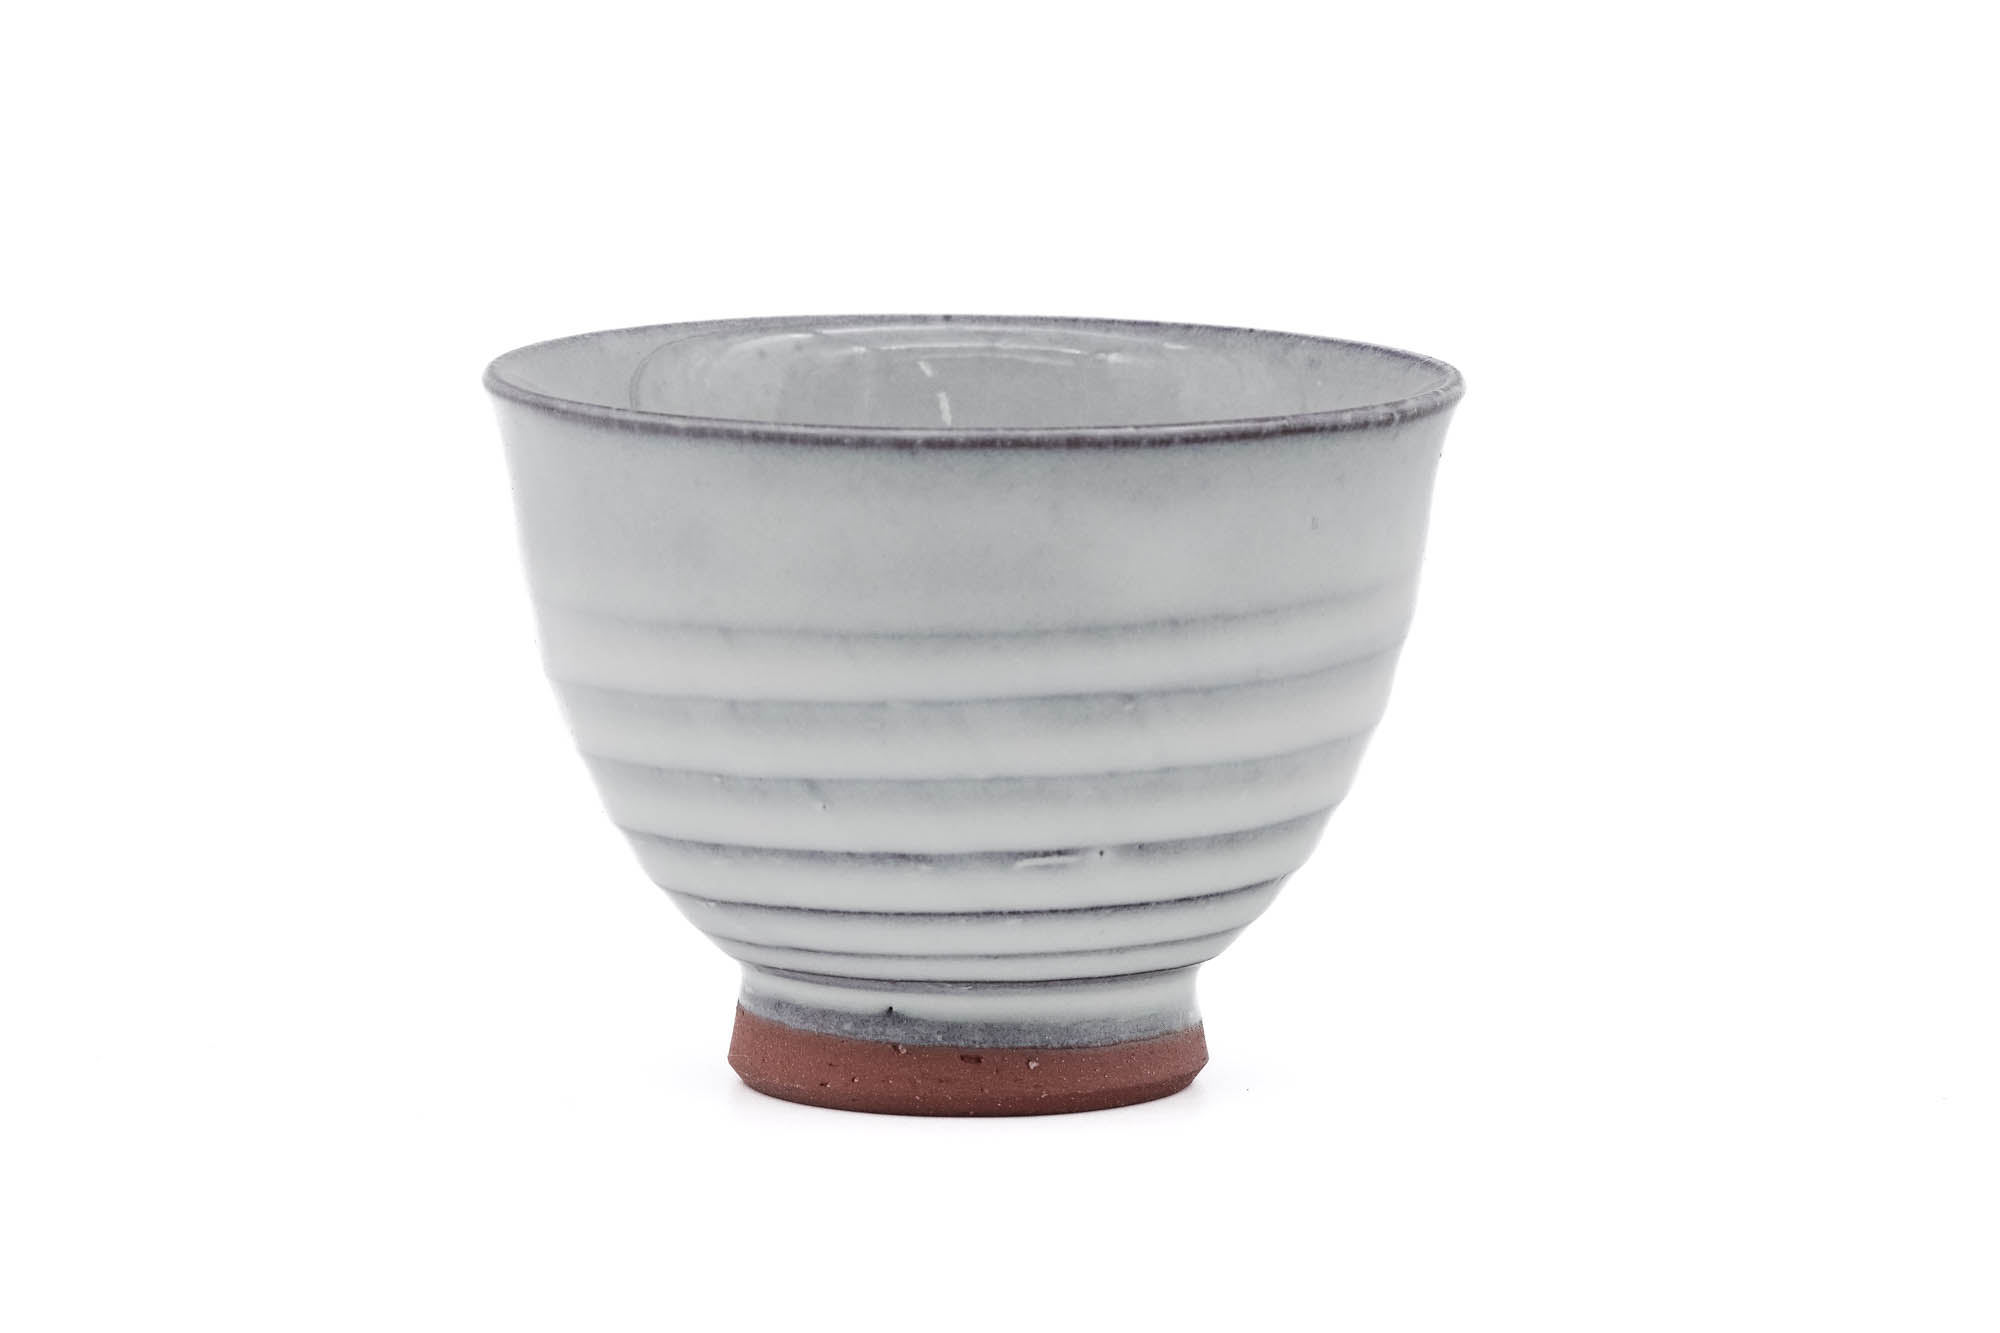 Japanese Teacups - 椿秀窯 Tsubakihide Kiln - Wooden Box Set of 5 White Spiraling Hagi-yaki Yunomi - 150ml